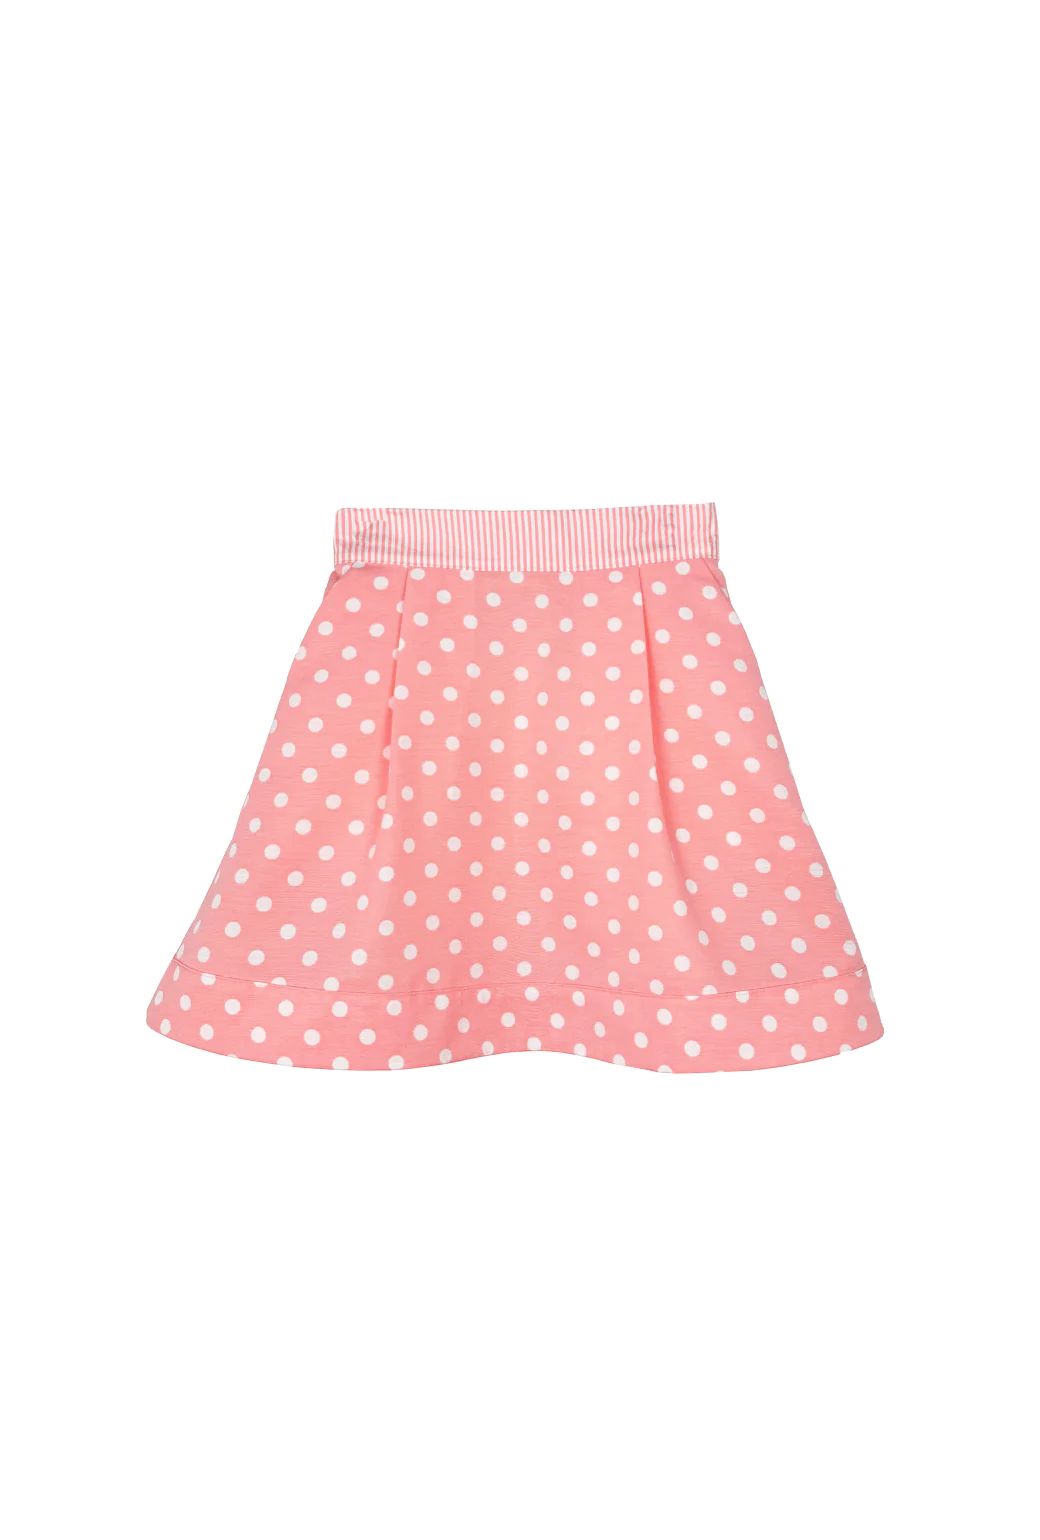 Buru x Kelly Golightly Flat MINI Skirt - Coral Dot | Shop BURU